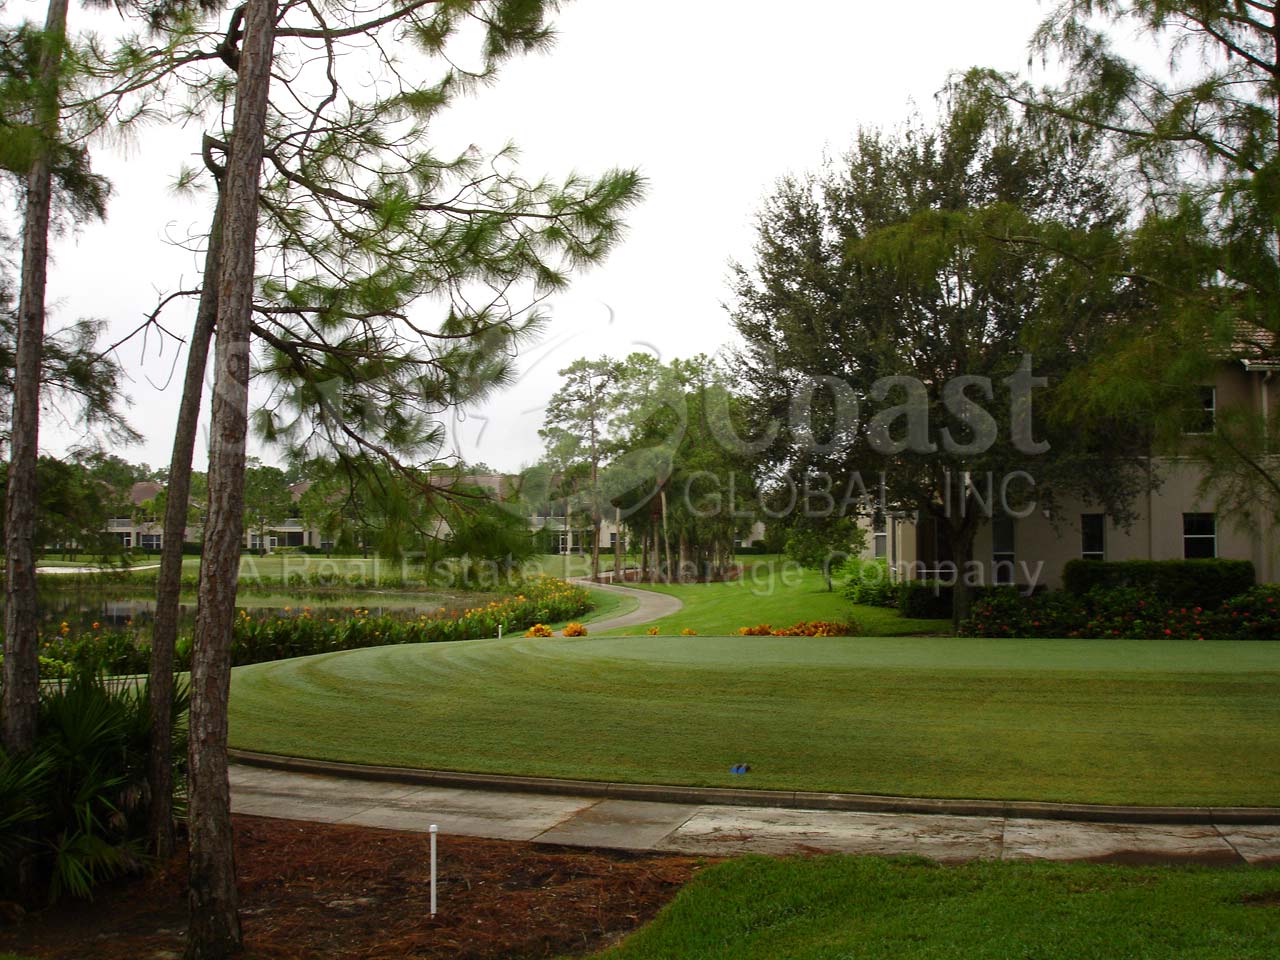 Wedgewood Walkway around the Community Golf Course